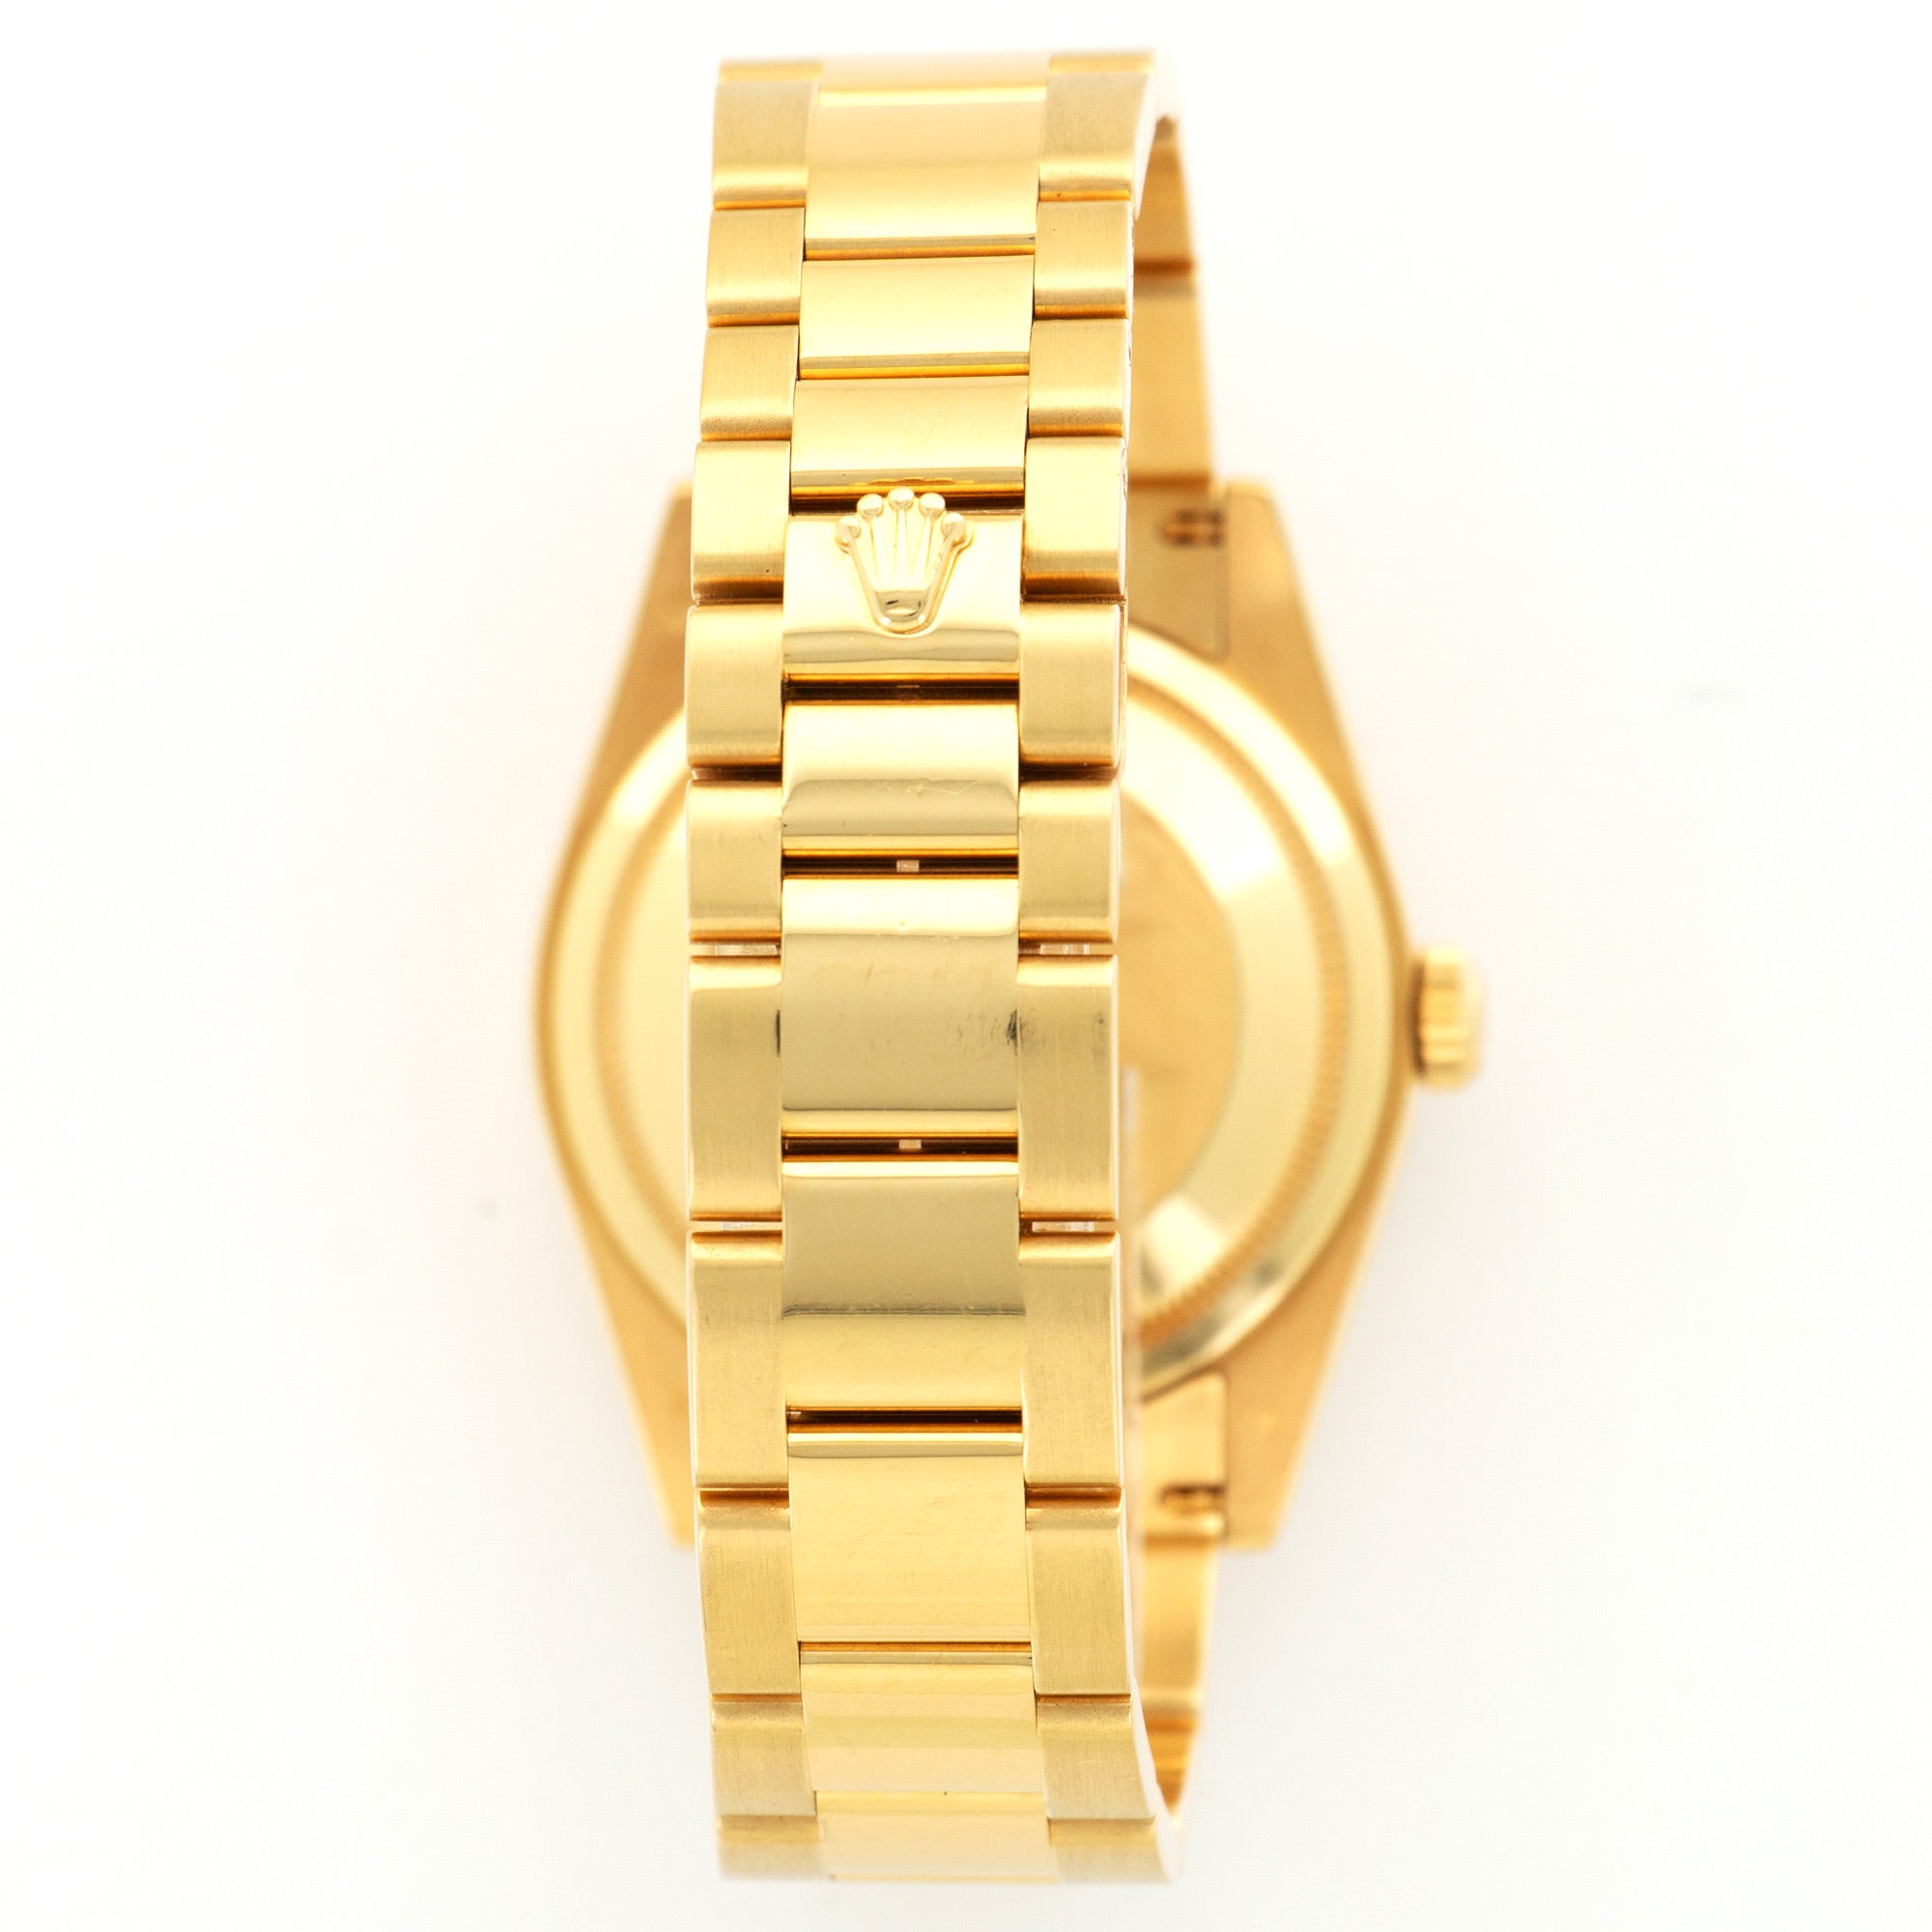 Rolex - Rolex Yellow Gold Day-Date Watch Ref. 118208 - The Keystone Watches